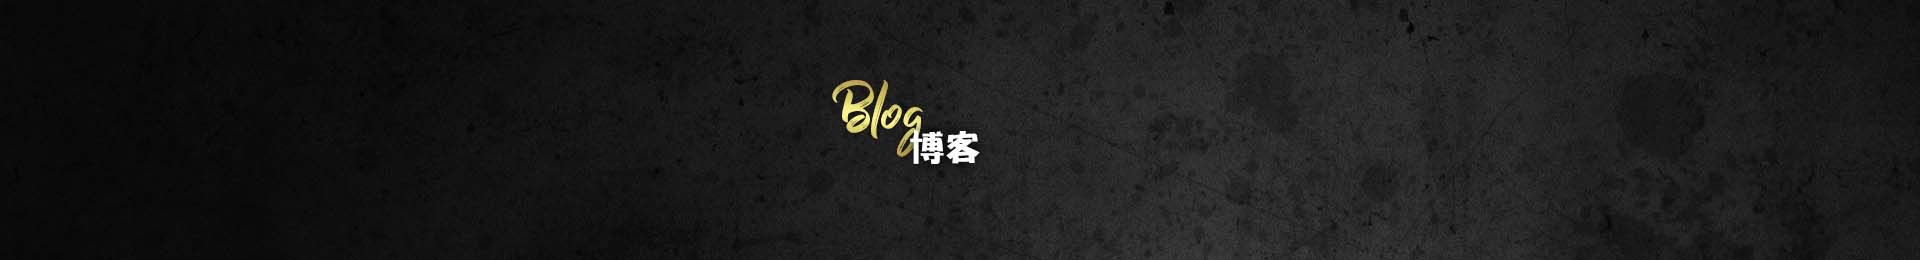 Blog - Banner